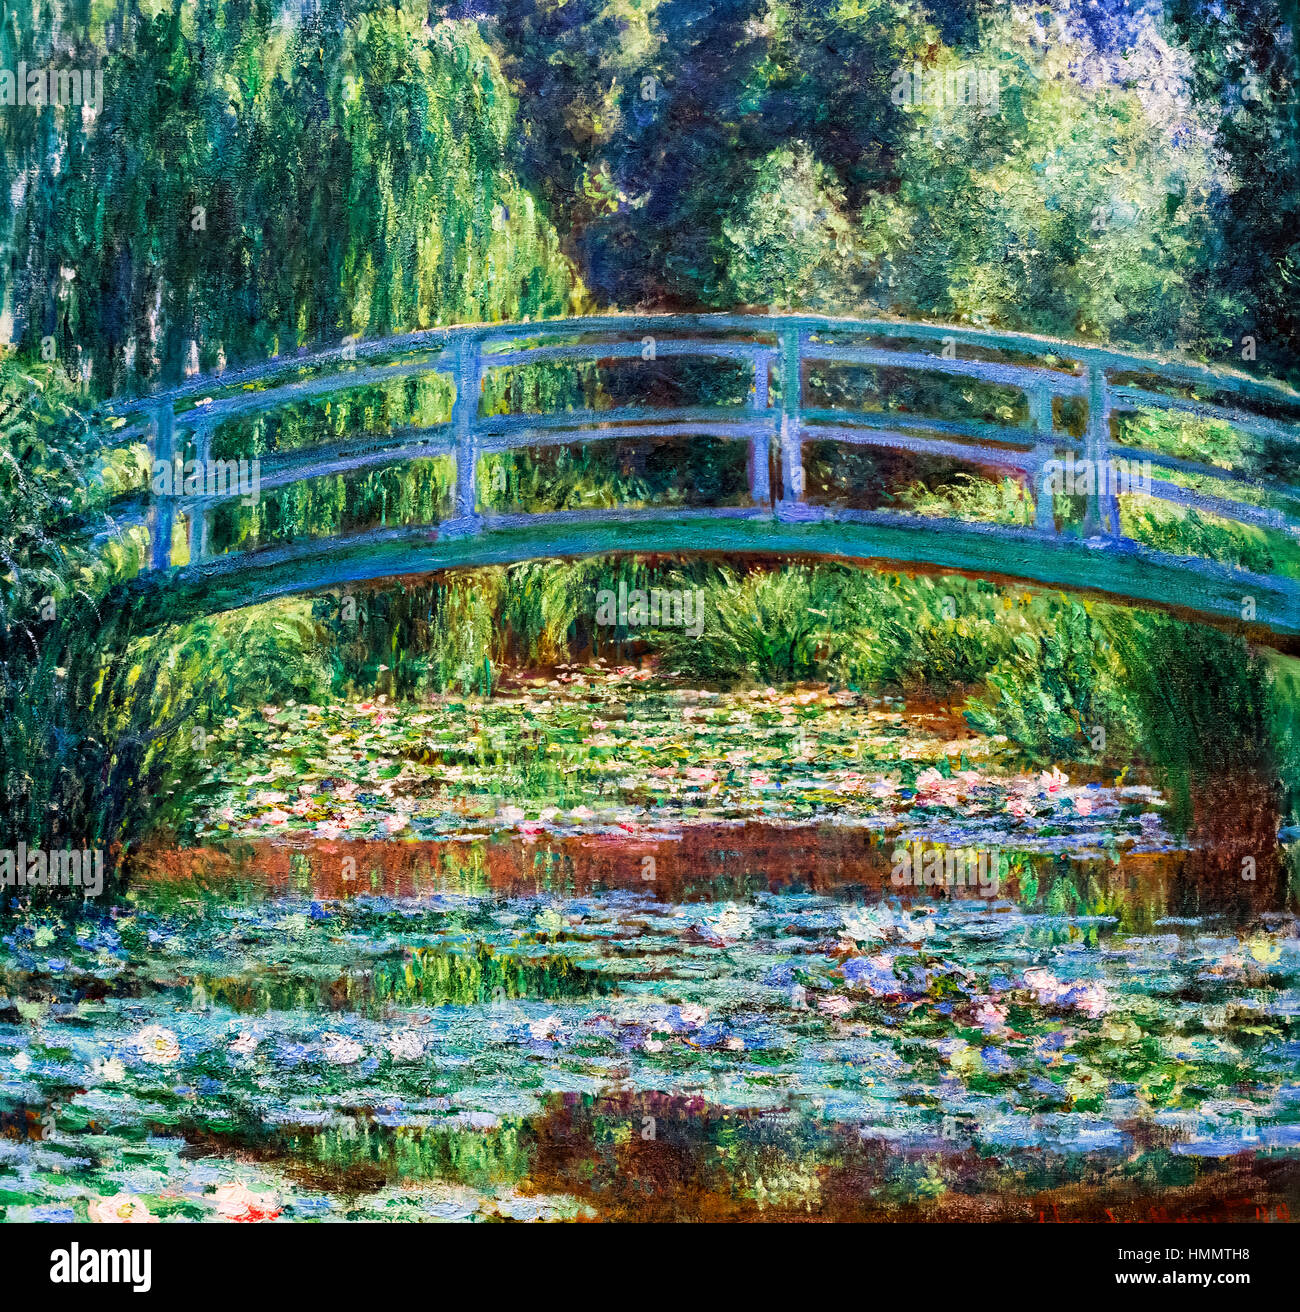 Monet. Gemälde mit dem Titel "The Japanese Footbridge and the Water-Lily Pool, Giverny" von Claude Monet, Öl auf Leinwand, 1899. Stockfoto